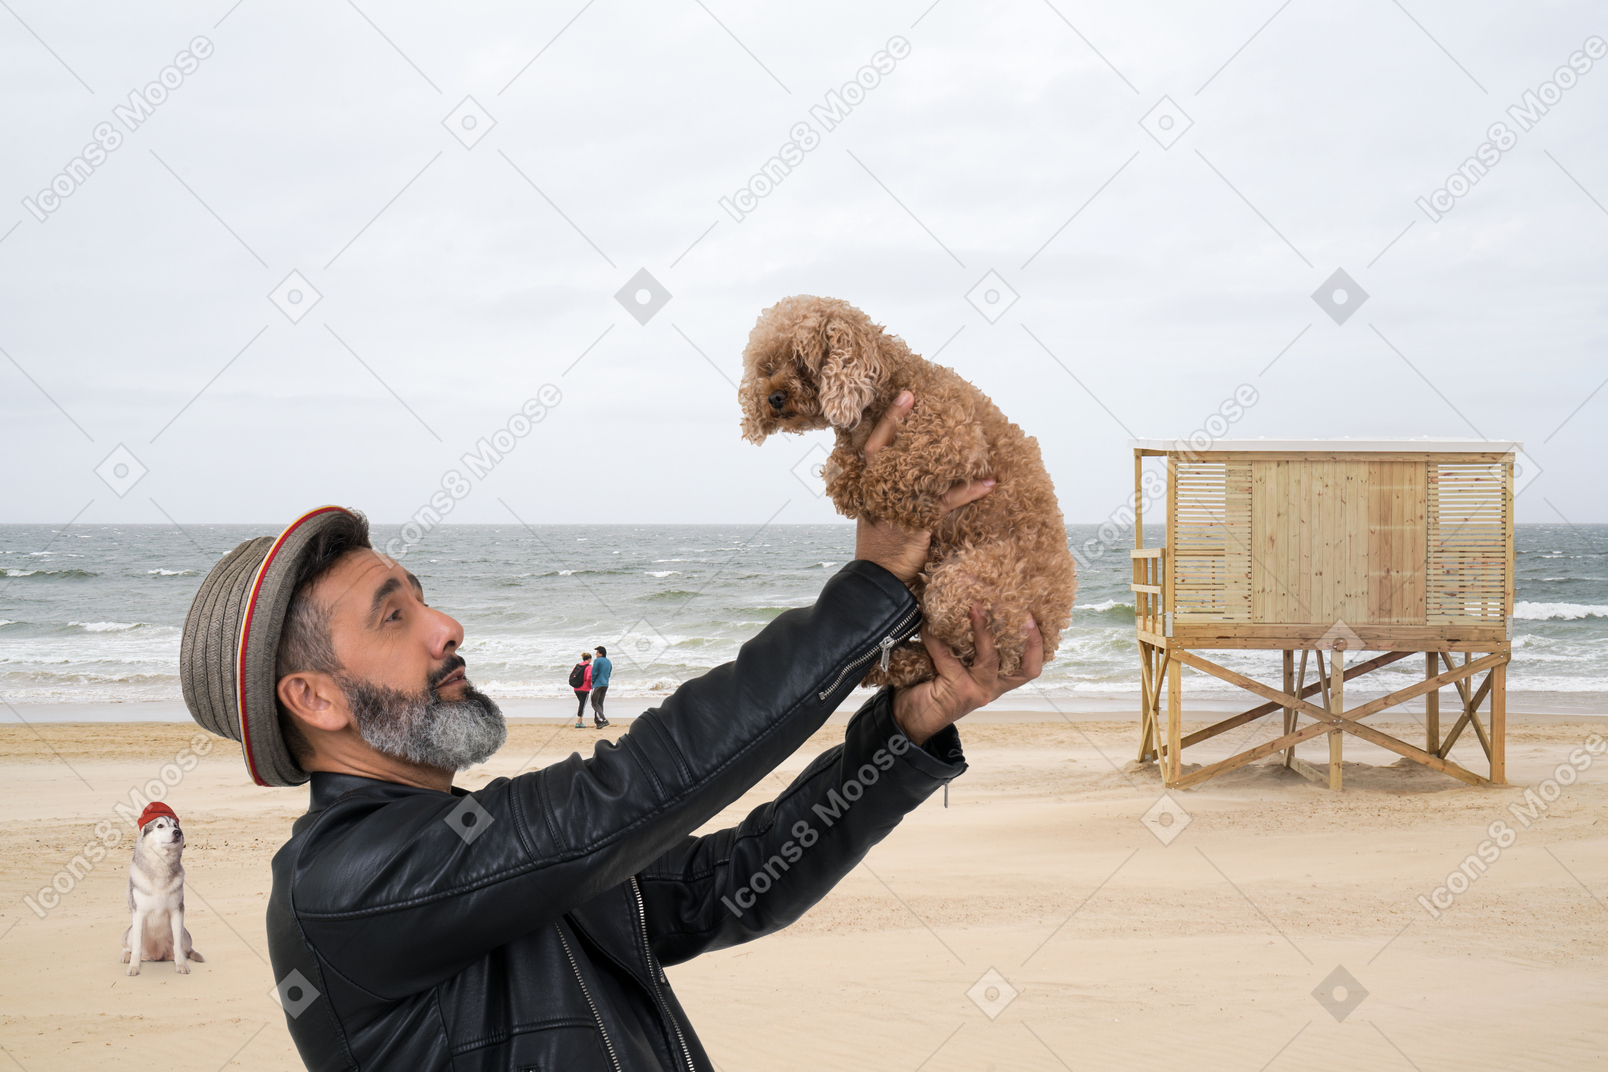 Mann, der seinen hund am strand anschaut